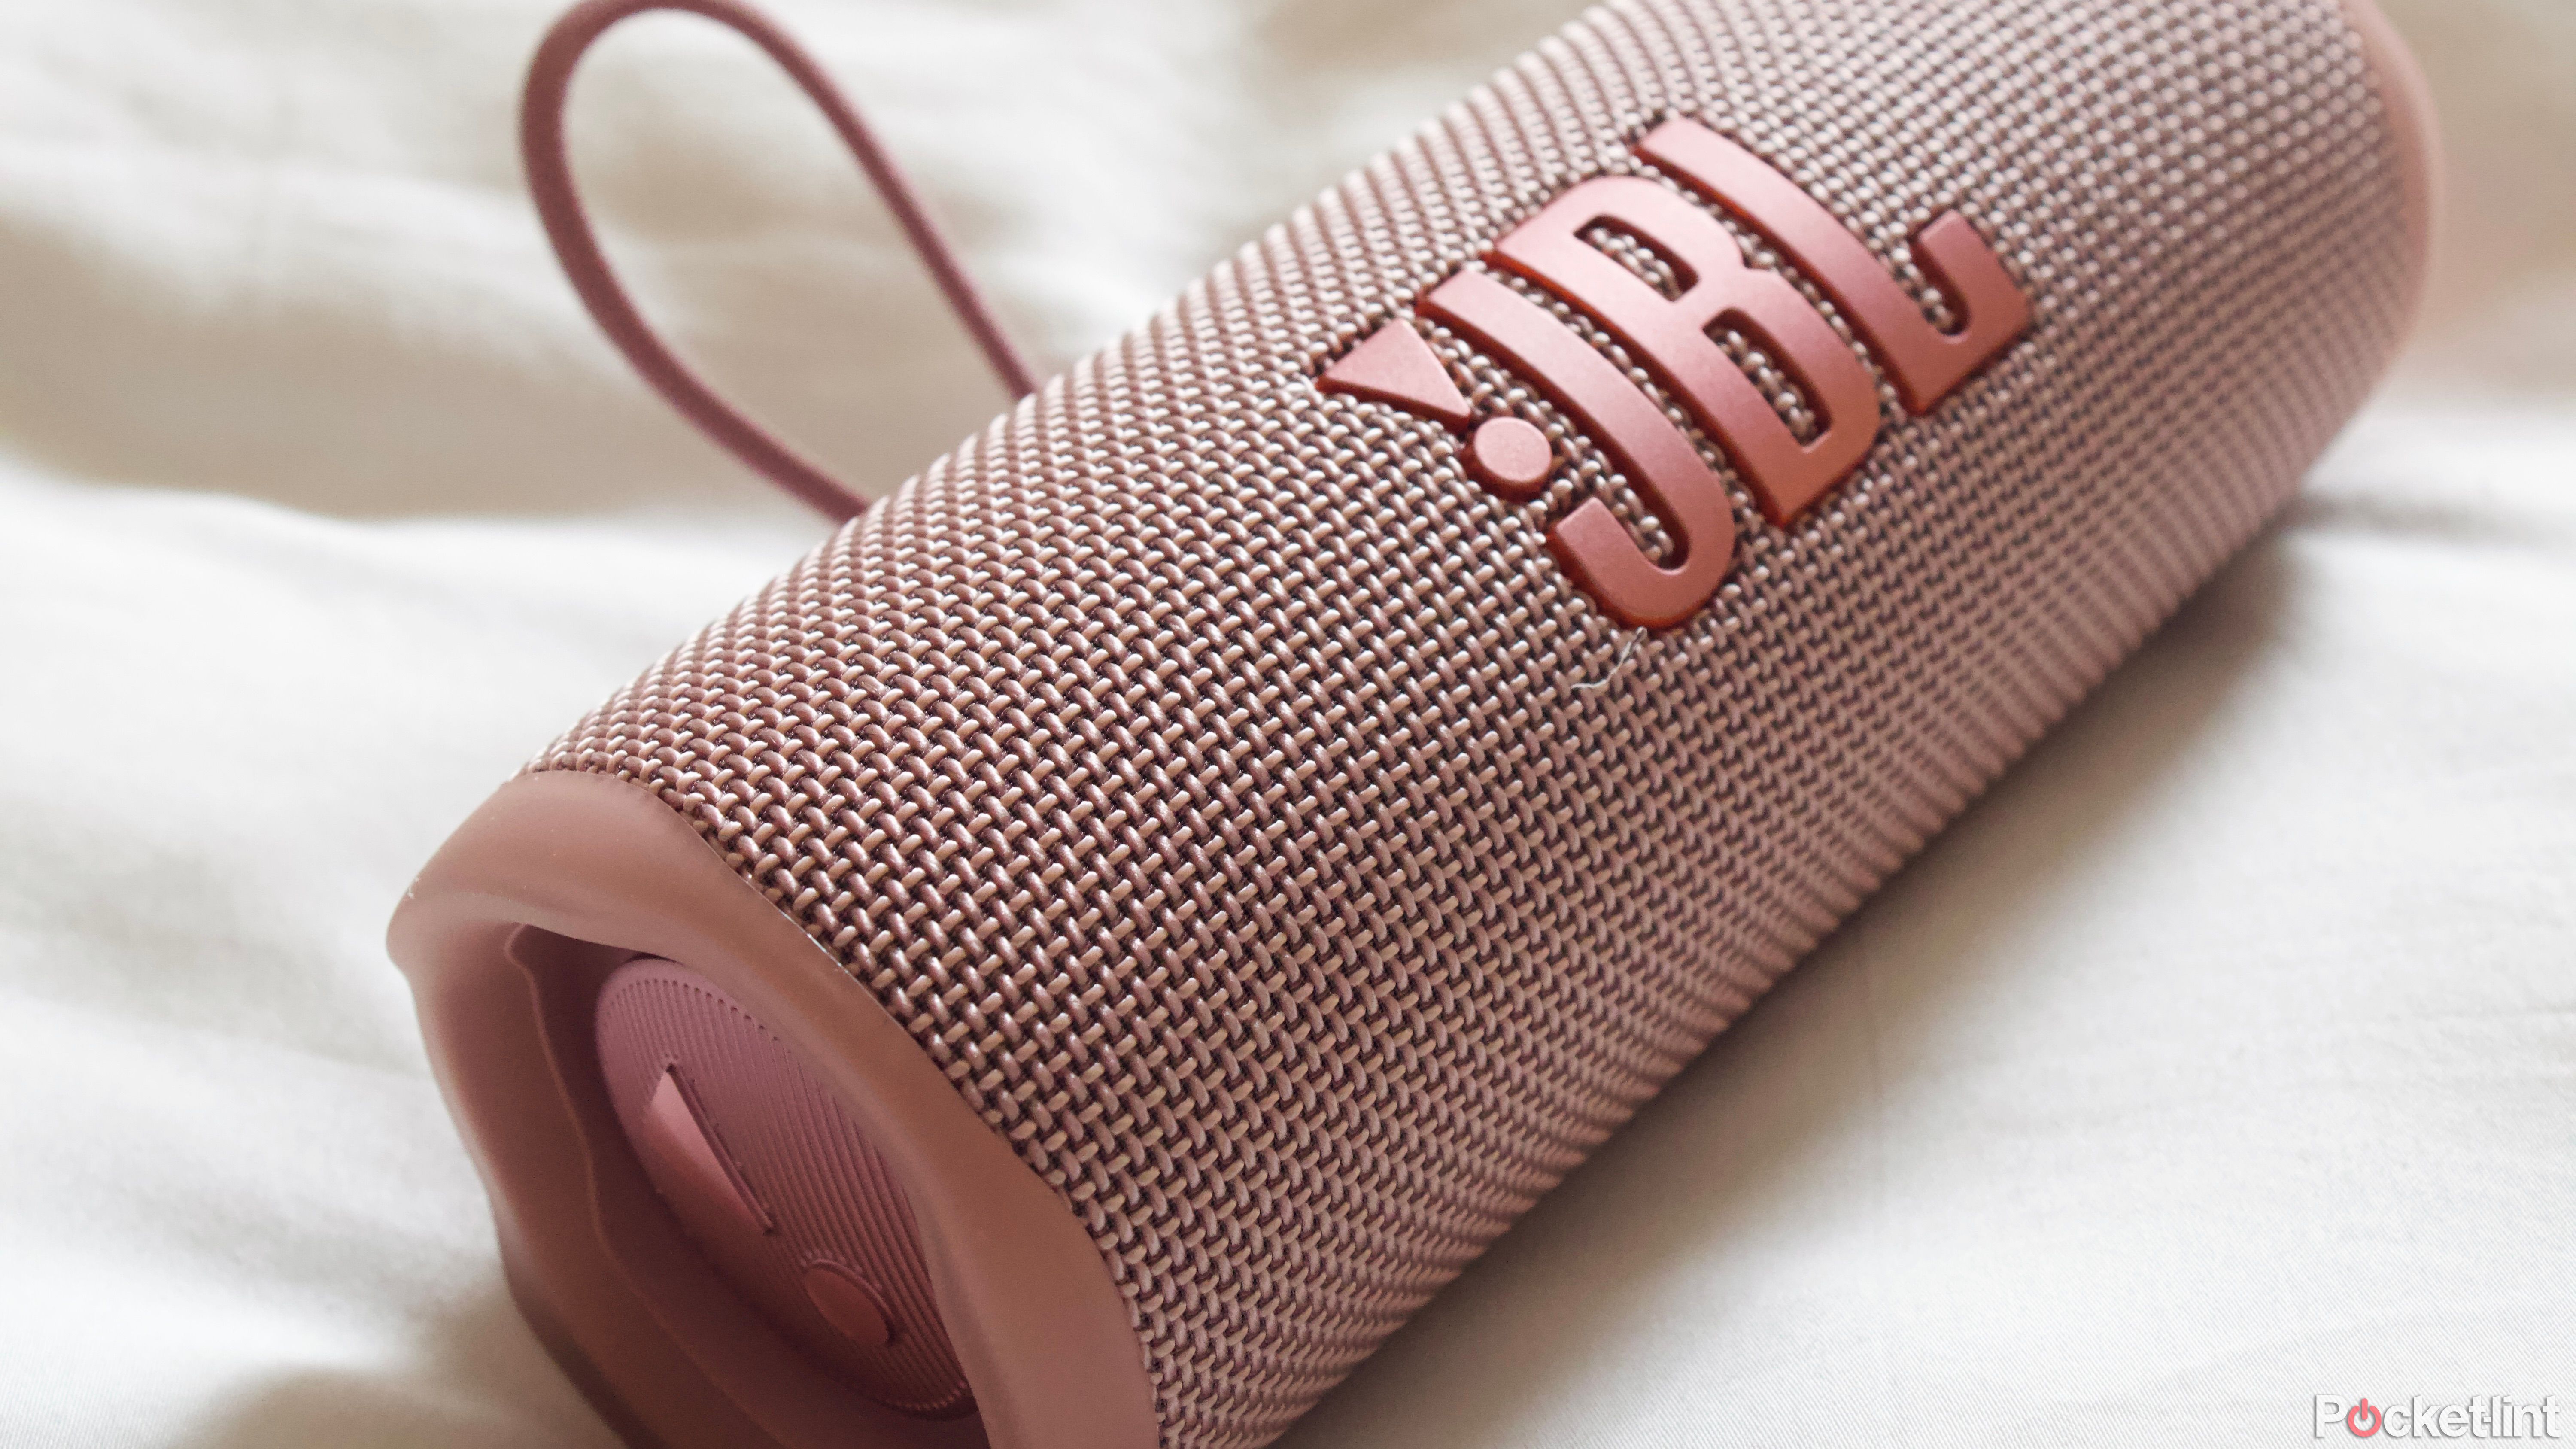 JBL Flip 5 Portable Bluetooth Speaker Red  - Best Buy